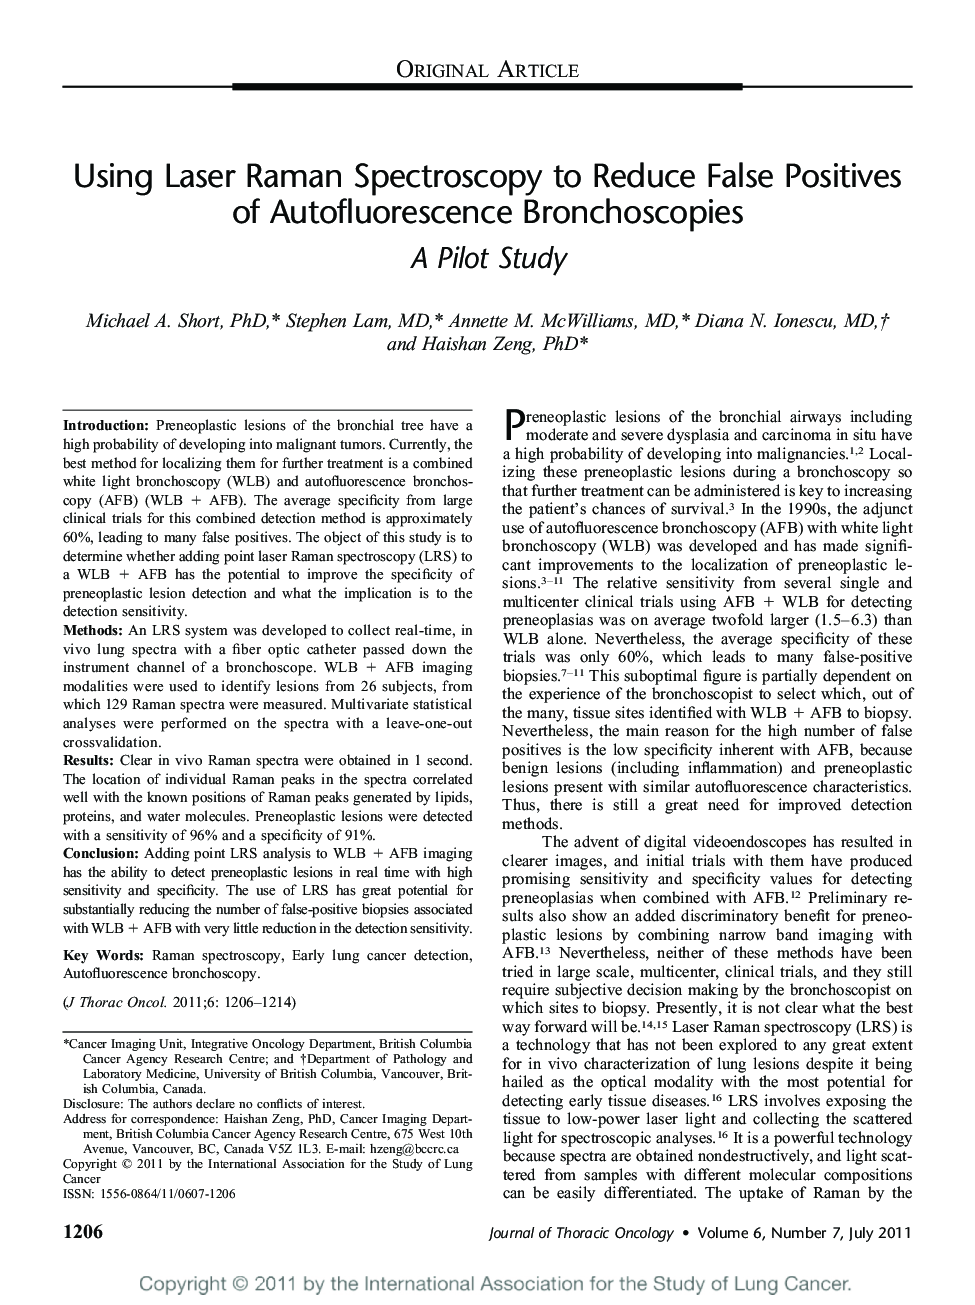 Using Laser Raman Spectroscopy to Reduce False Positives of Autofluorescence Bronchoscopies: A Pilot Study 